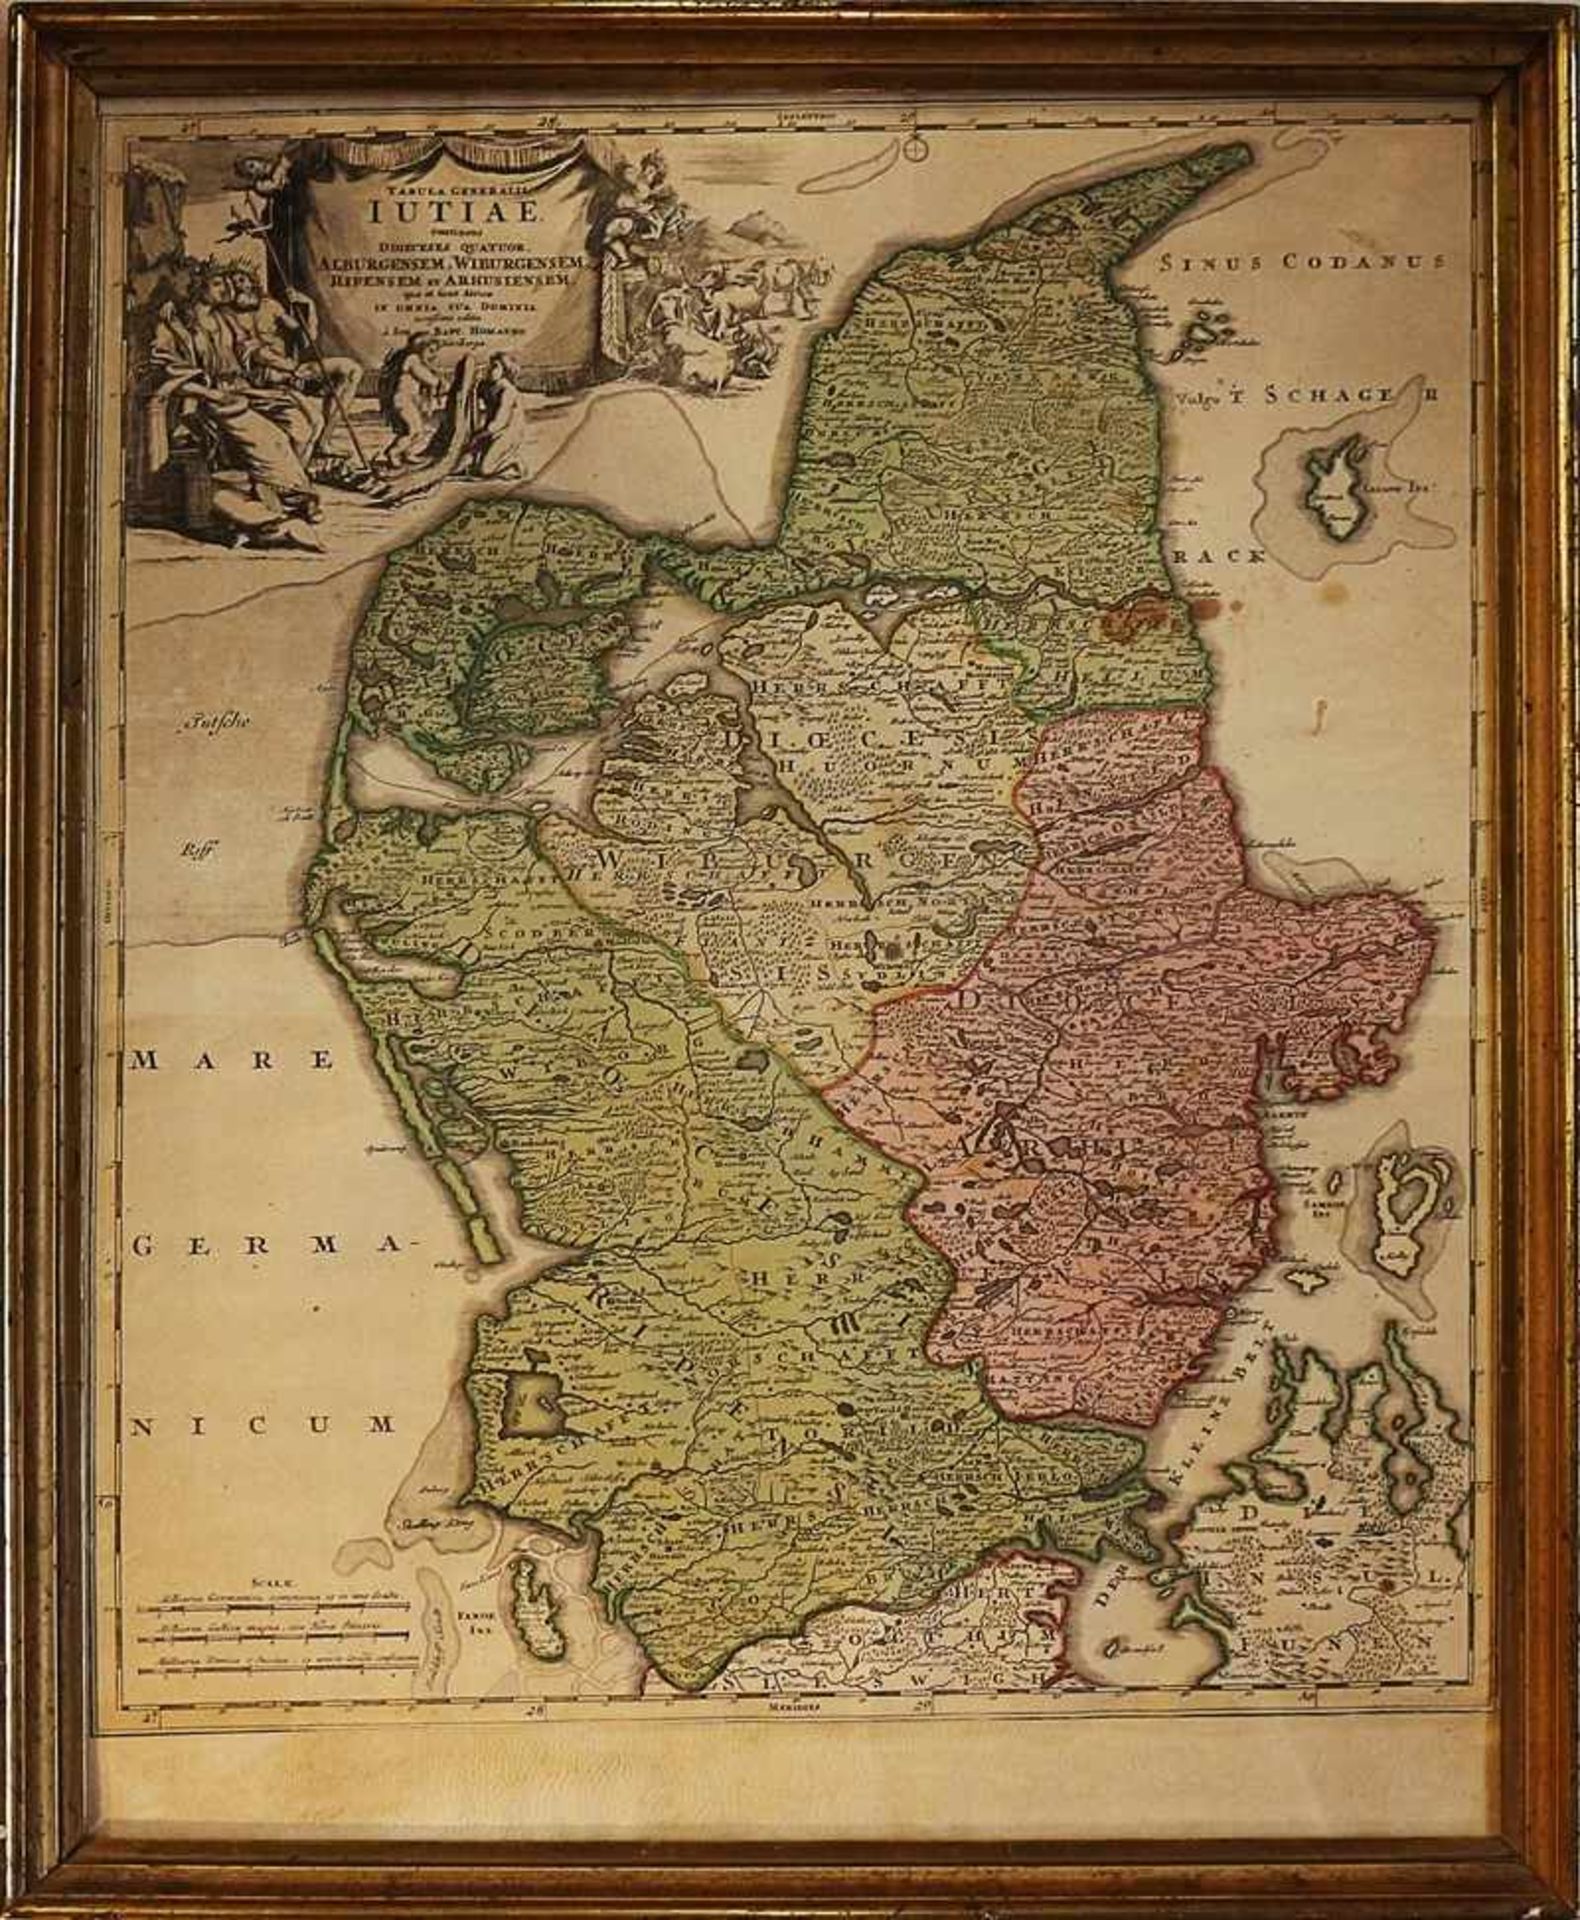 Karte - Homann, Johann Baptist 18. Jh., "Tabula generalis Iutiae", Kupferstichkarte des Gebiets